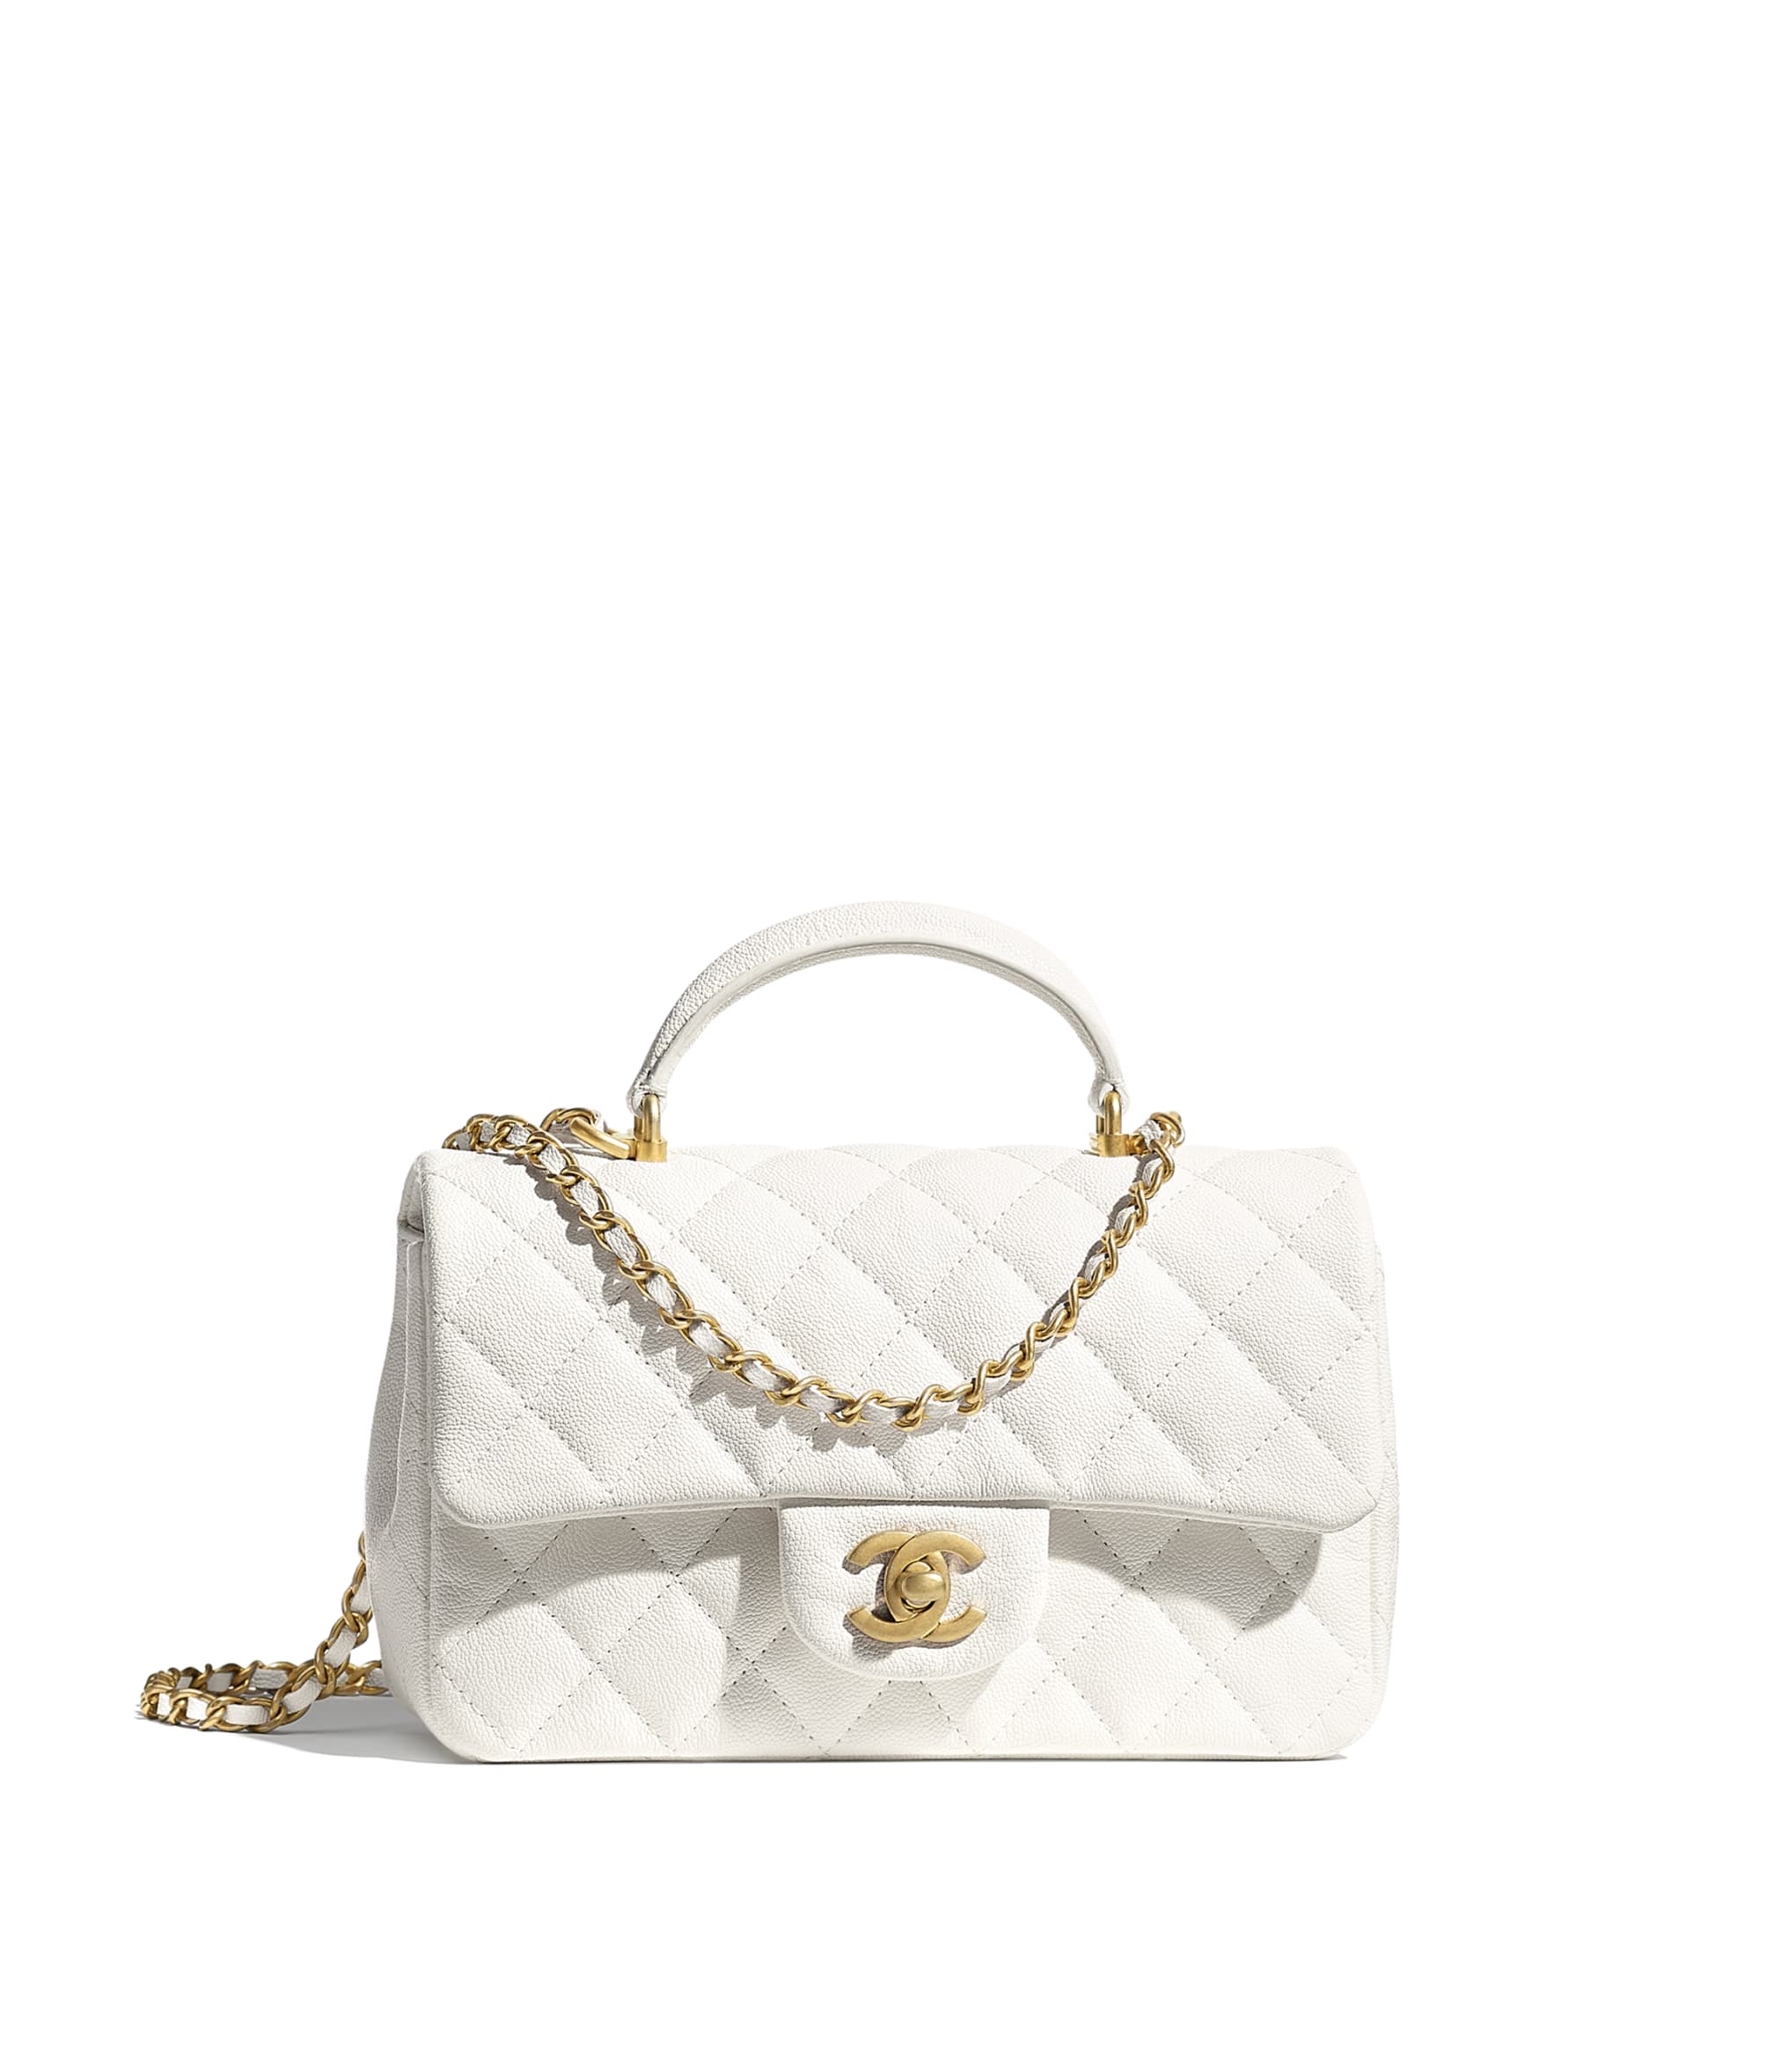 Chanel MINI FLAP BAG WITH TOP HANDLE | Hàng hiệu 1:1 HVip